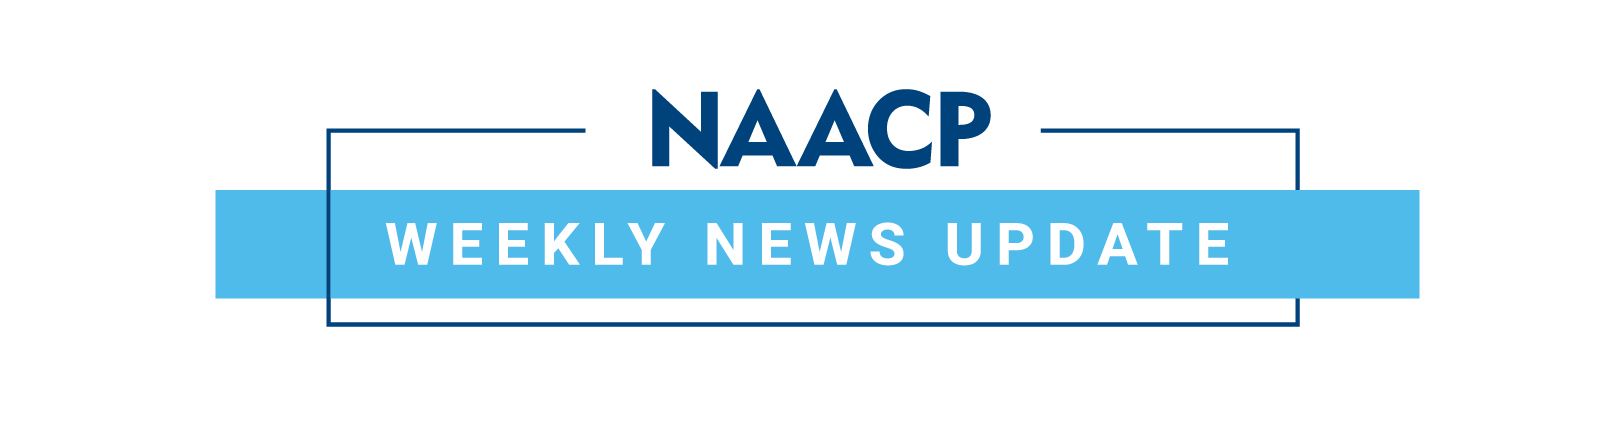 naacp weekly news update